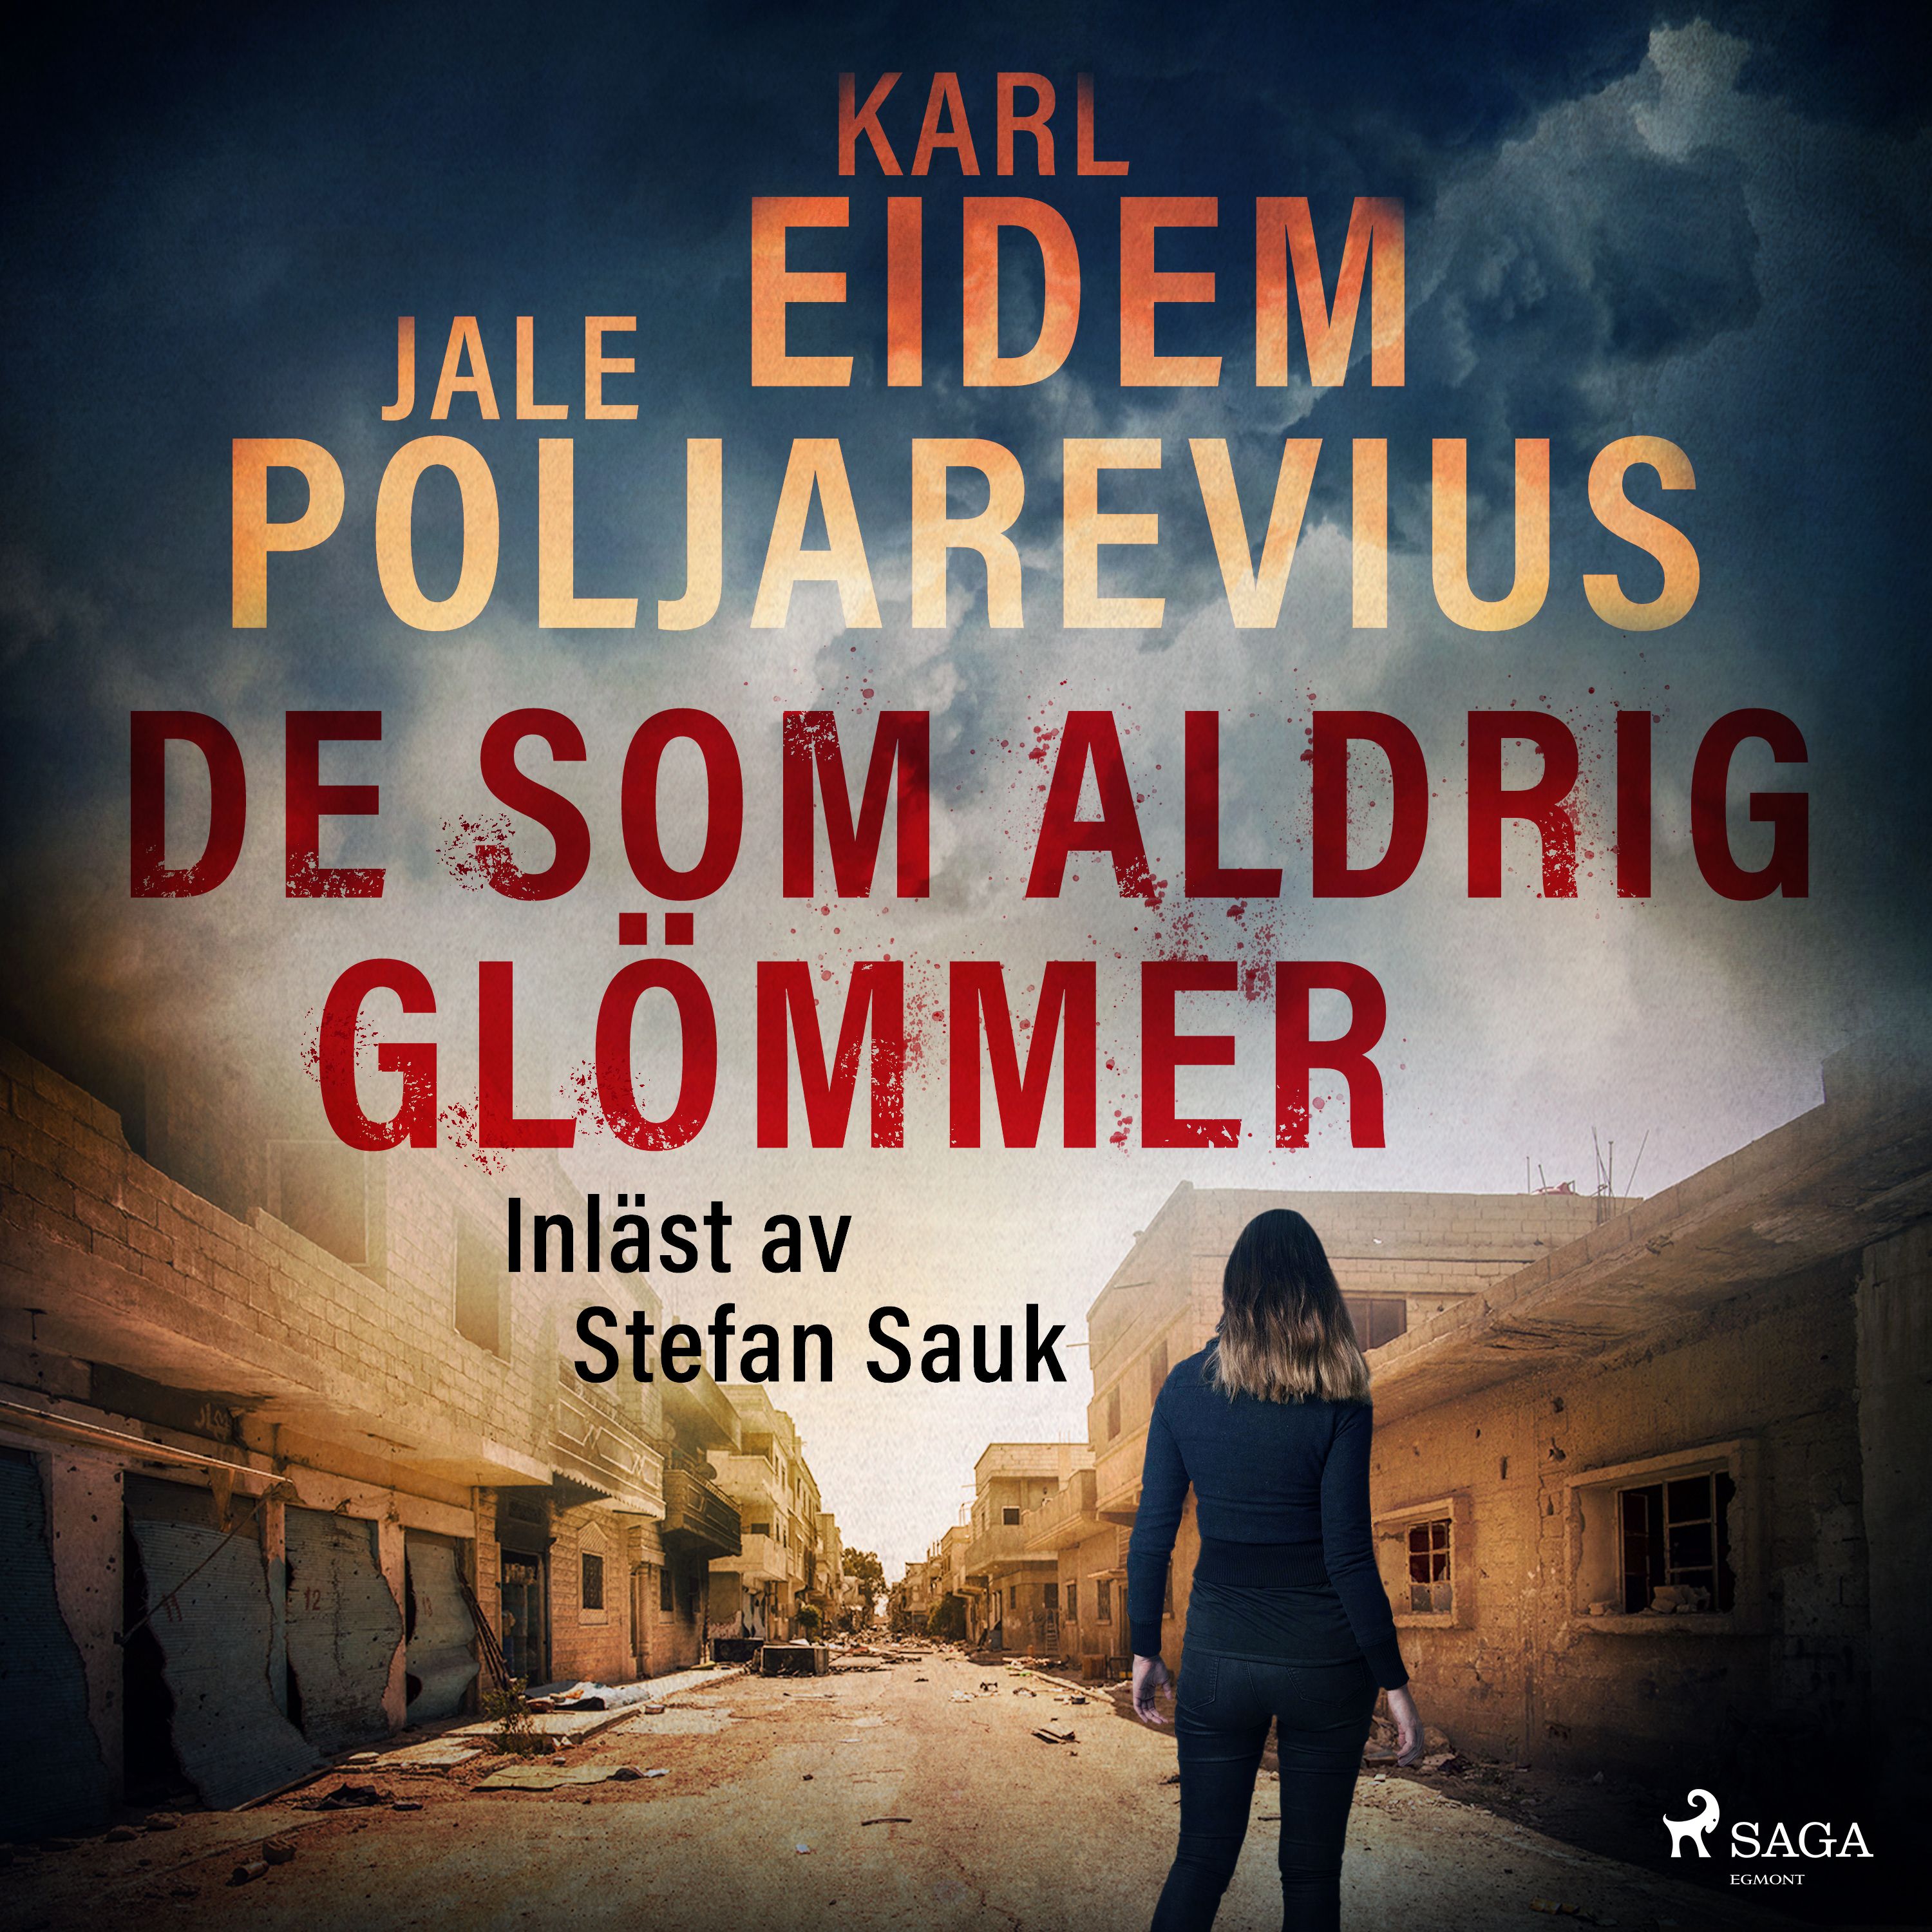 De som aldrig glömmer, audiobook by Karl Eidem, Jale Poljarevius